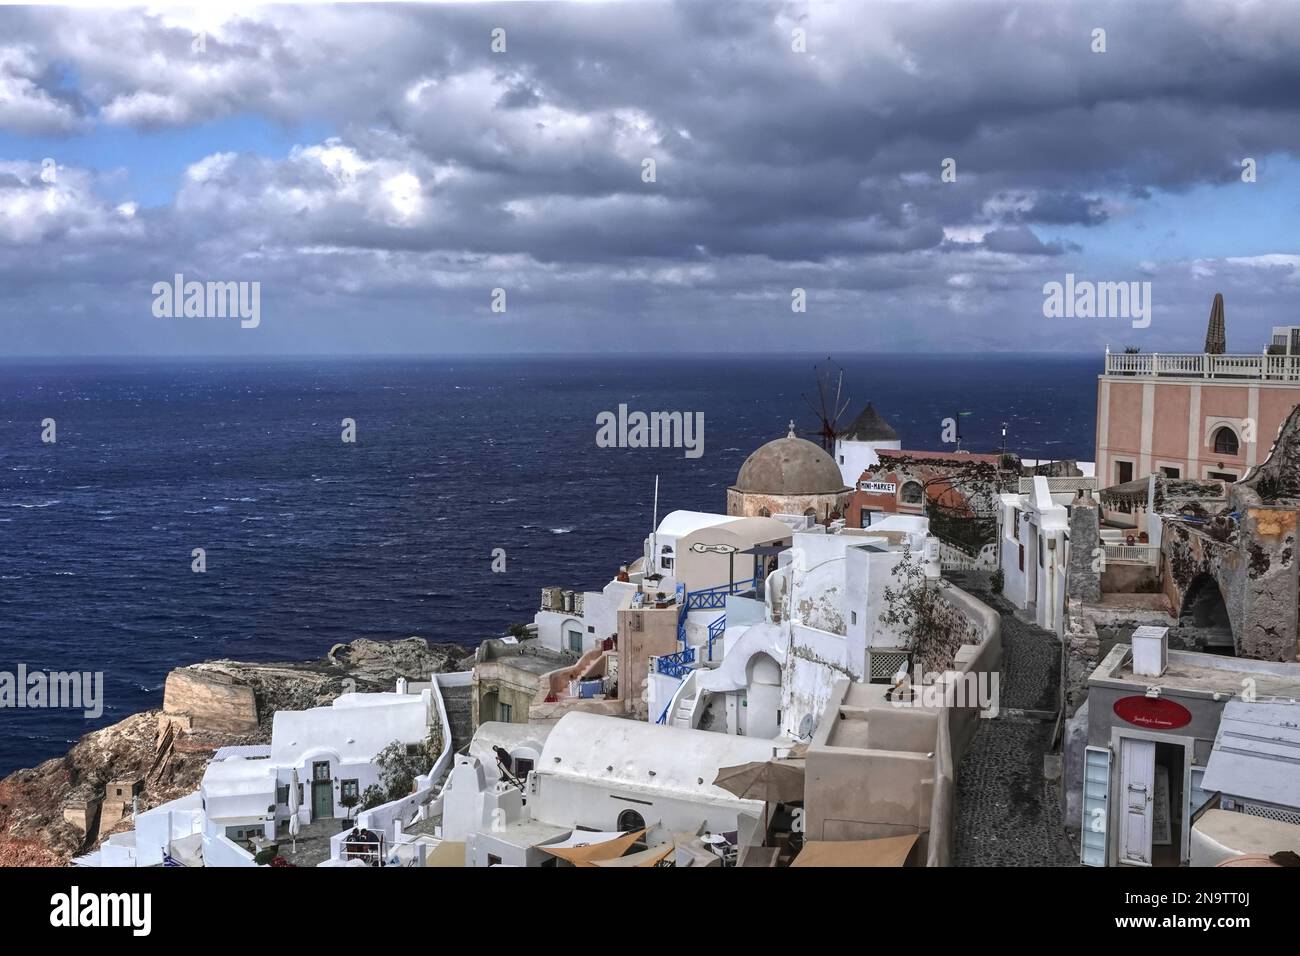 Santorini, one of the Cyclades islands in the Aegean Sea, Greece Stock Photo